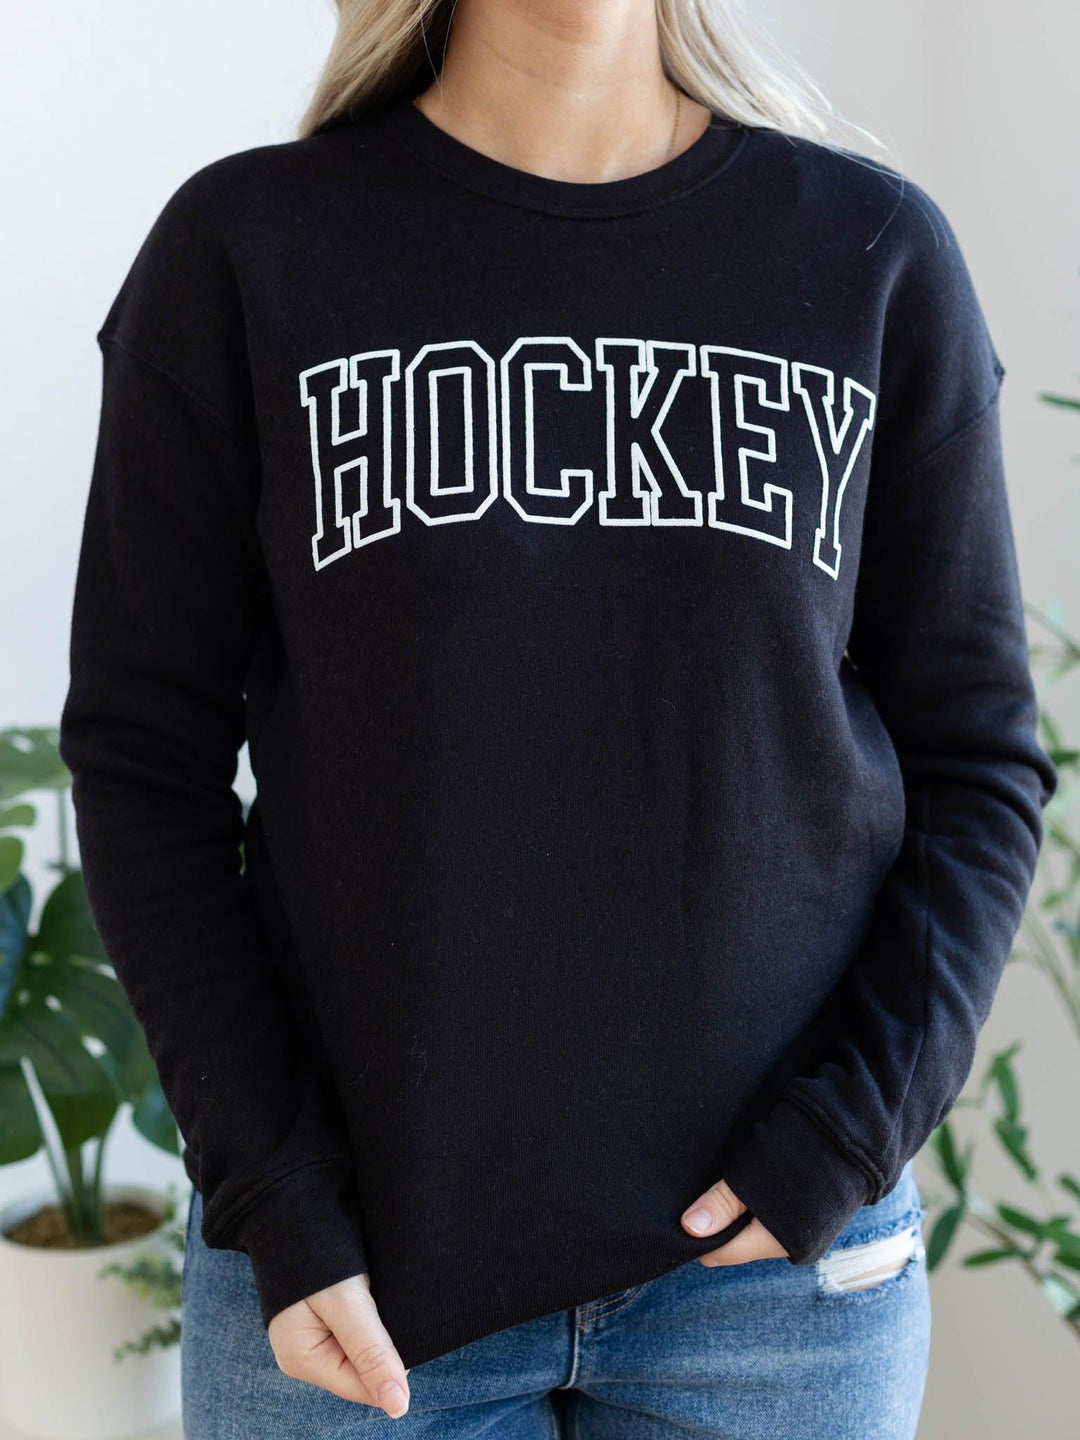 OAT Collective-Hockey Puff Graphic Sweatshirt - Leela and Lavender